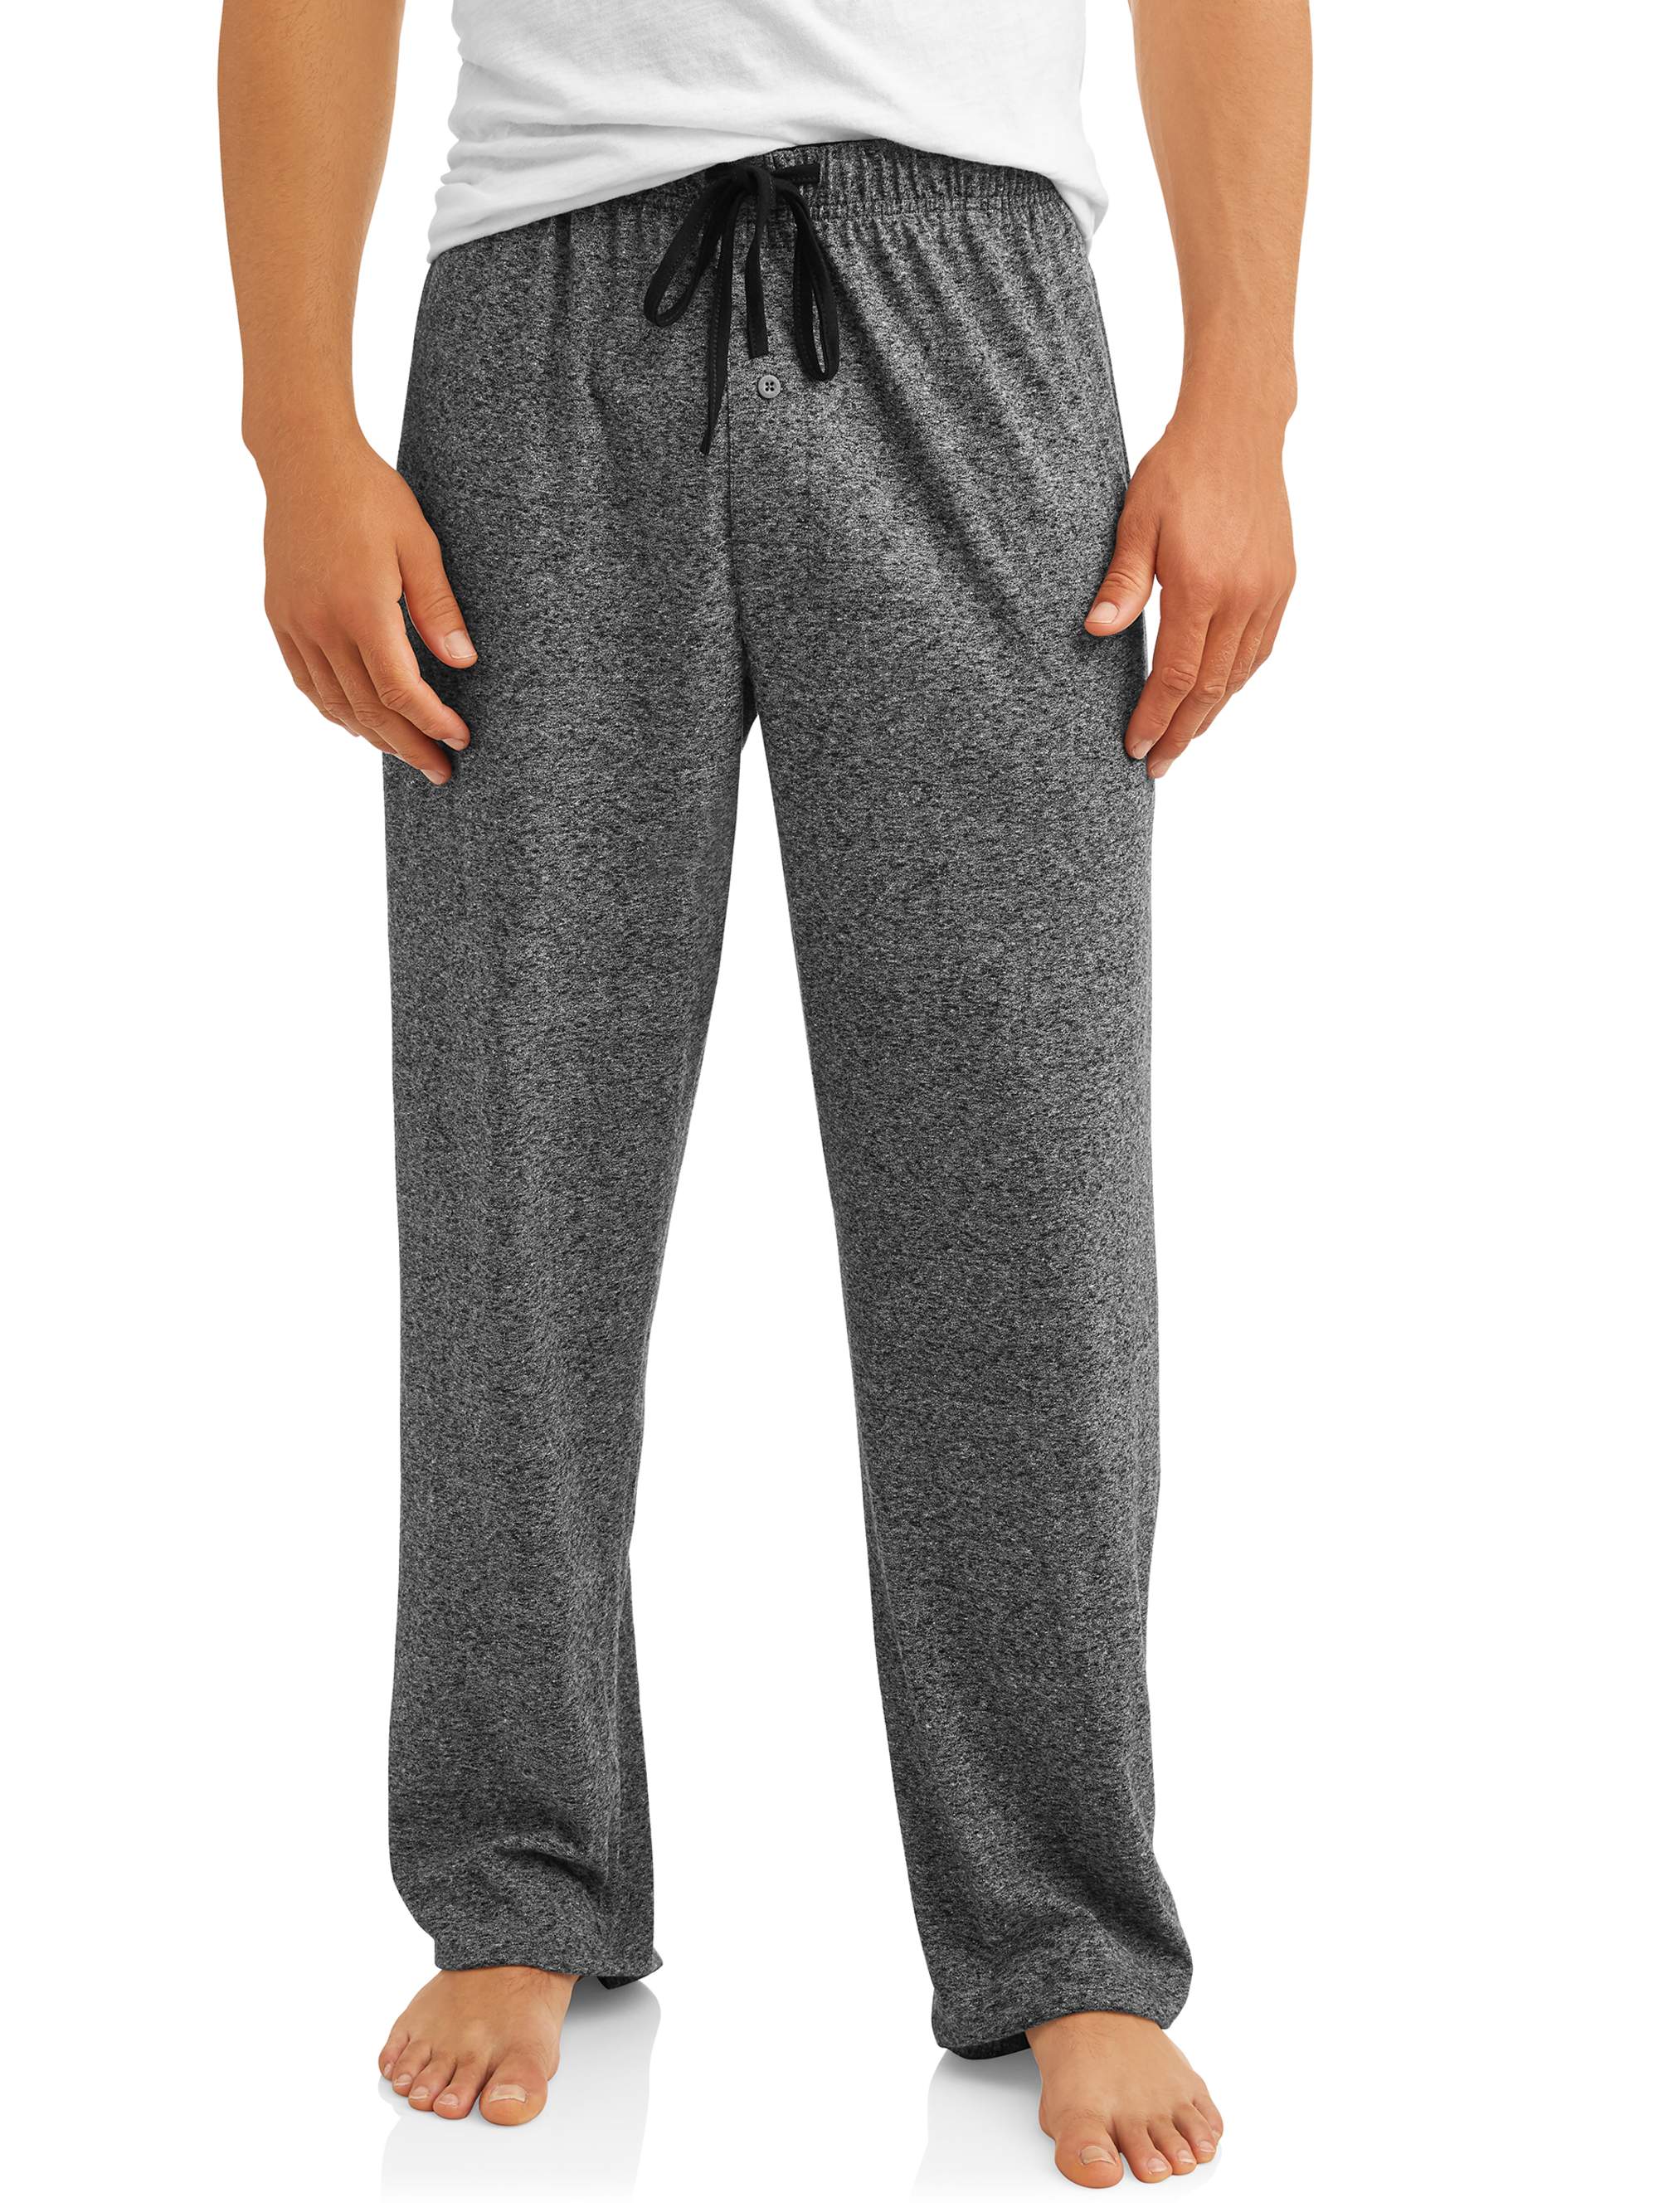 Hanes Men's and Big Men's X-Temp Solid Knit Pajama Pant - image 1 of 3